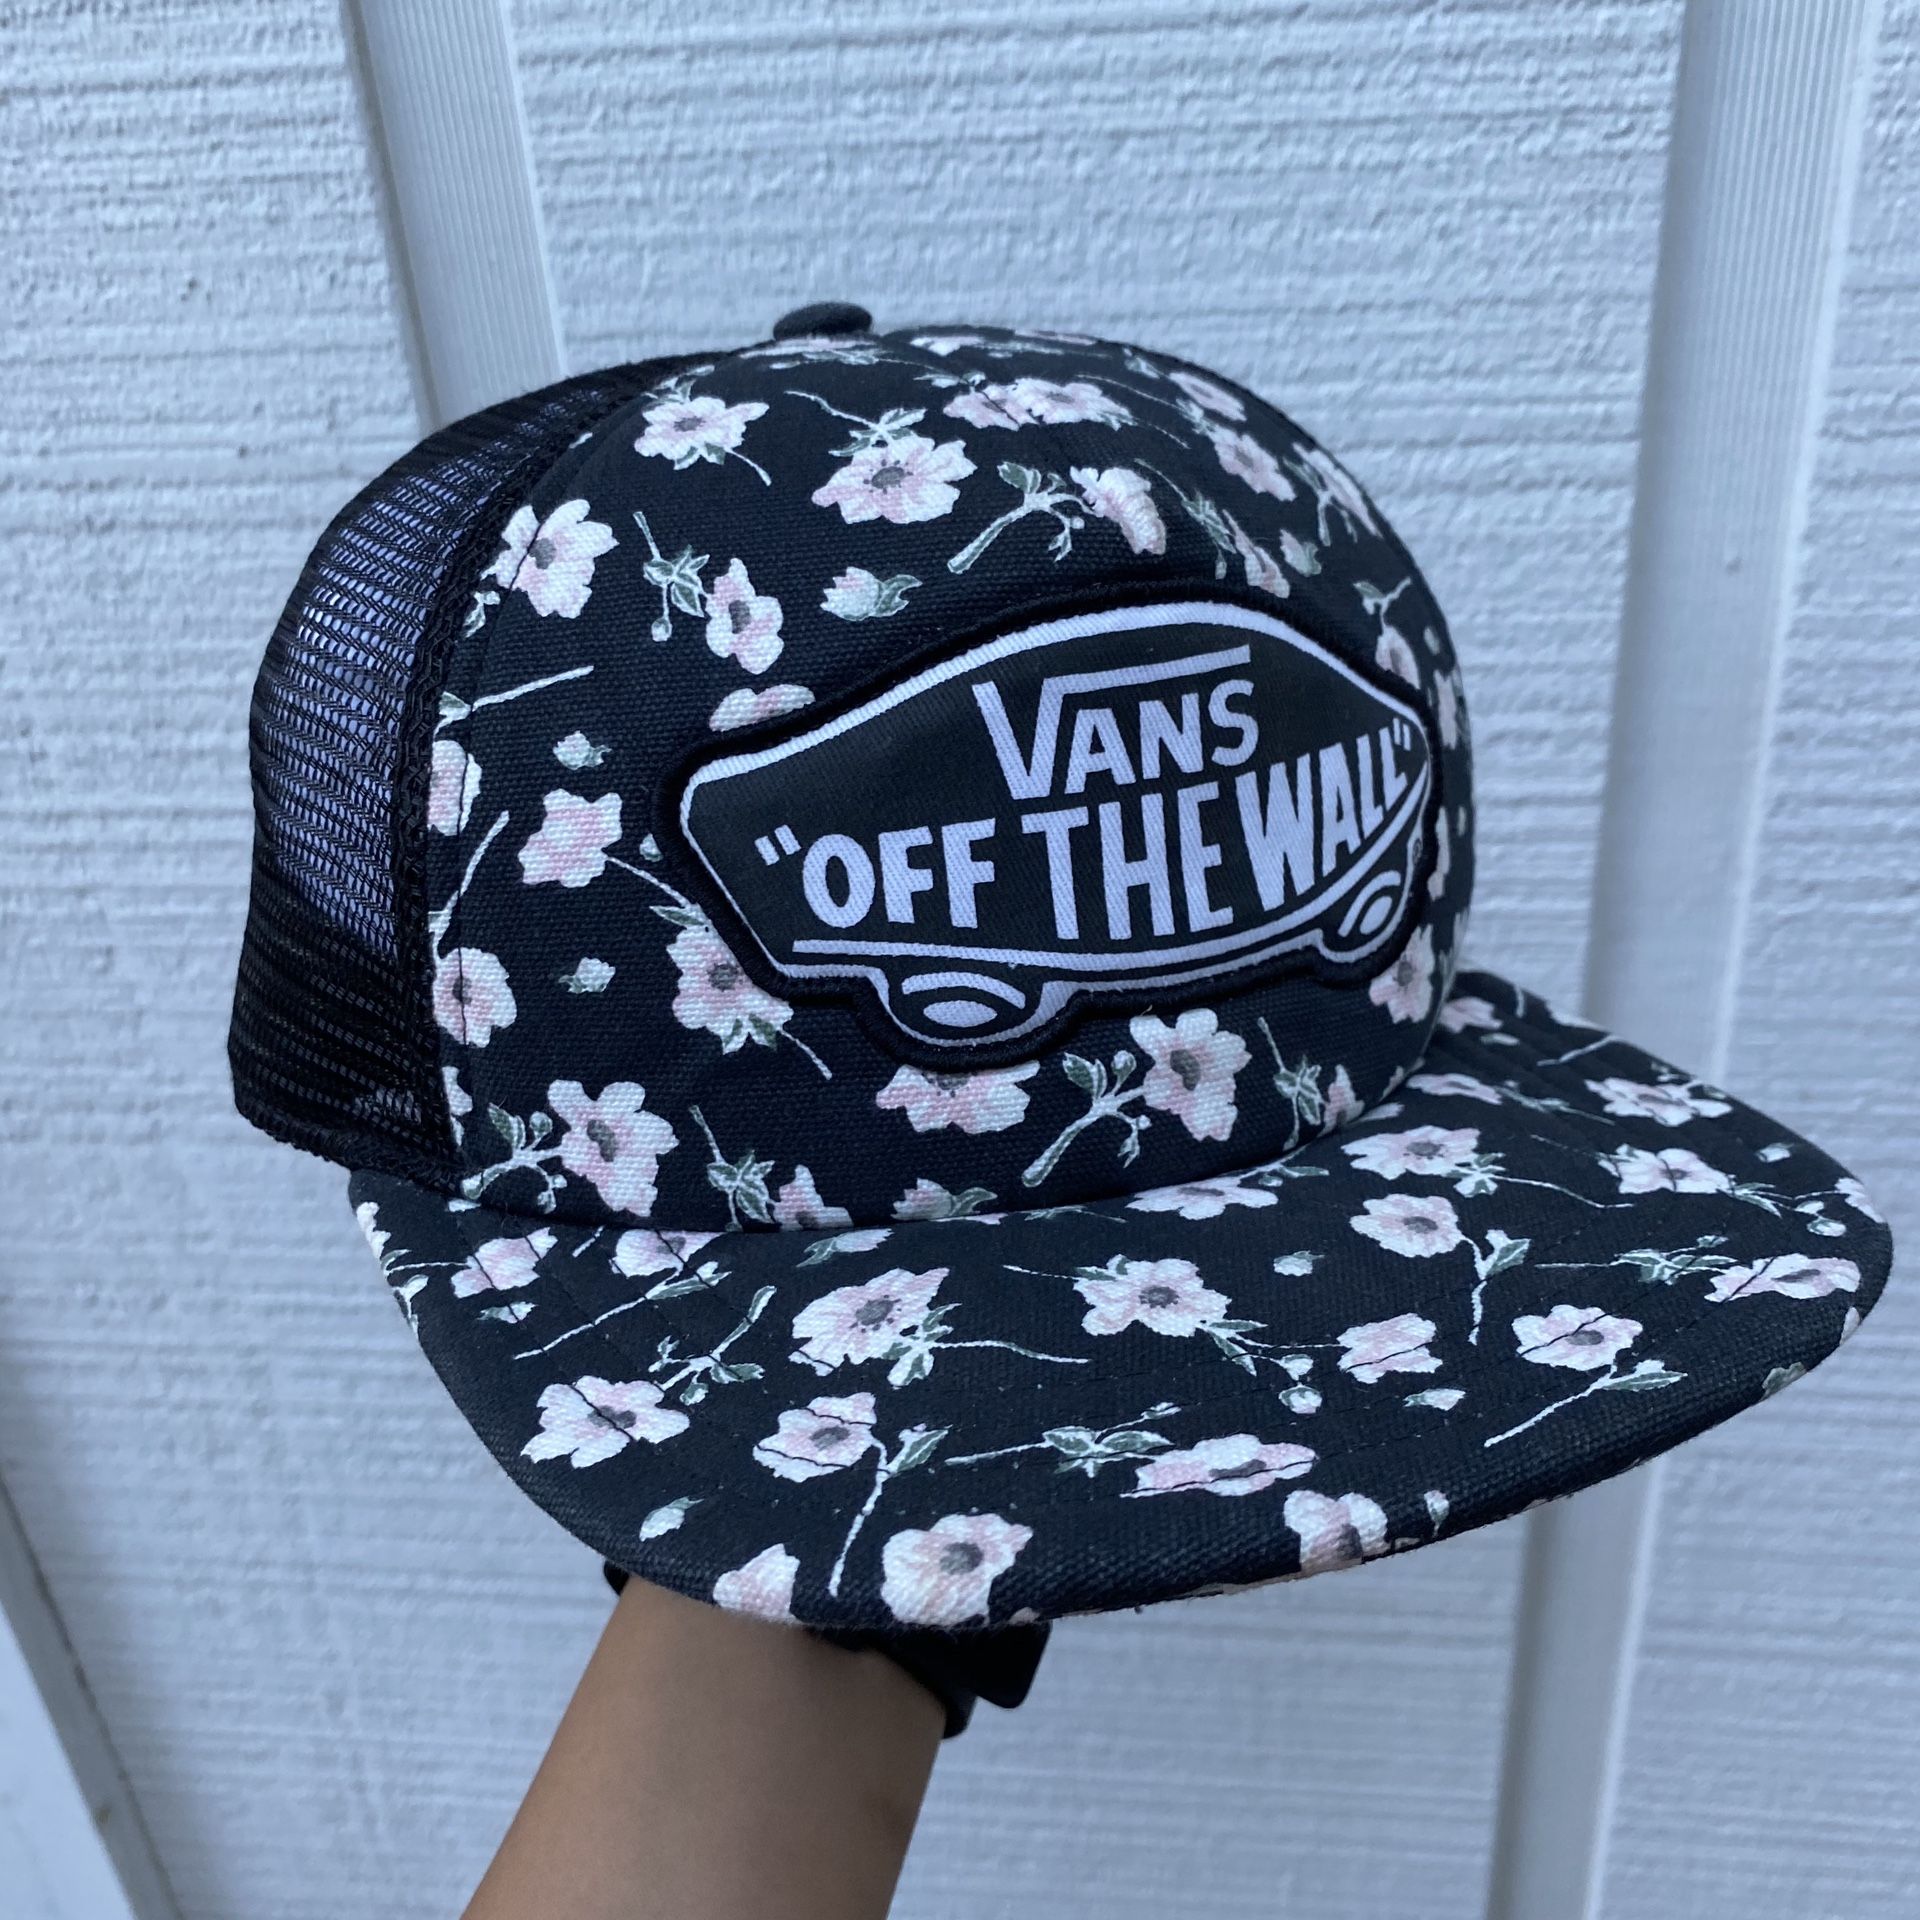 Vans Off The Wall Floral Trucker Hat Adjustable